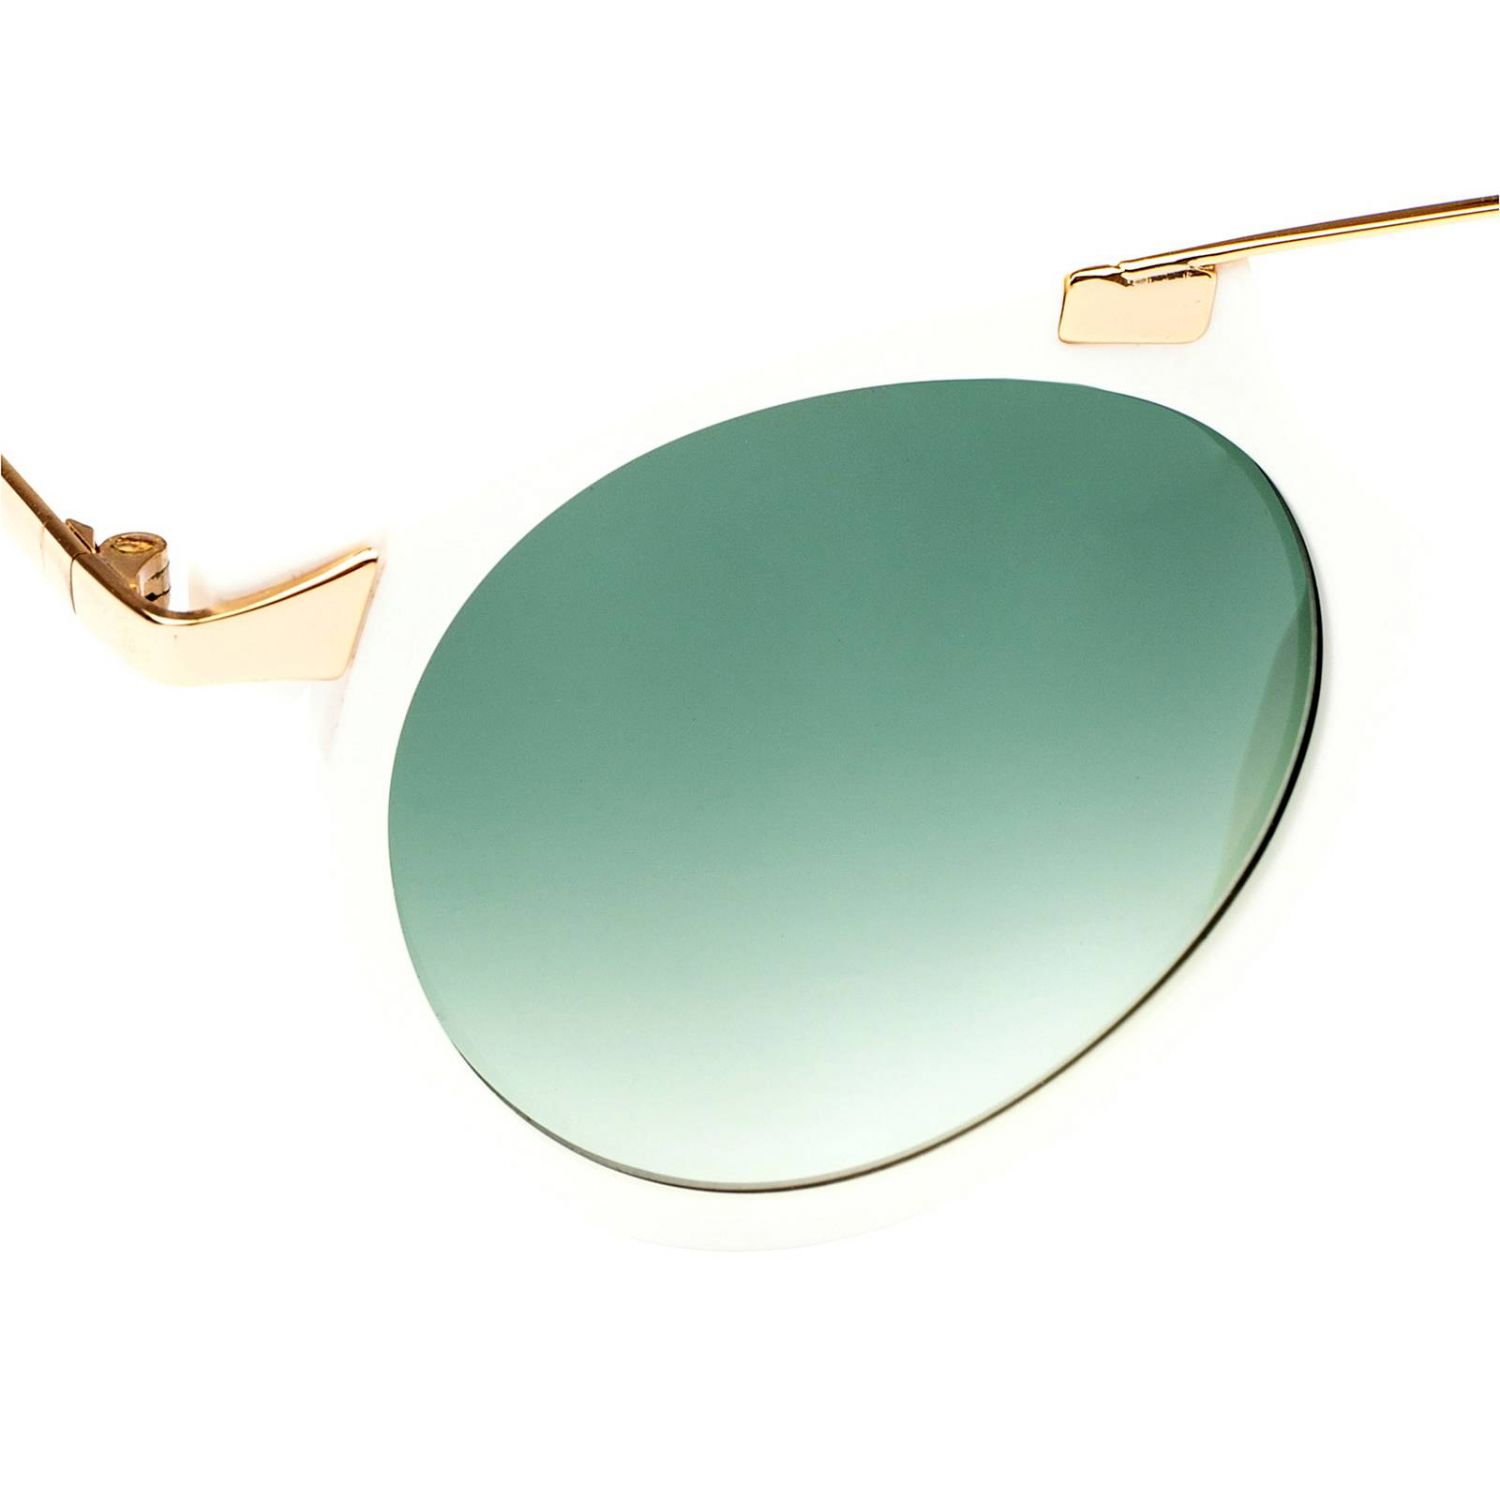 Bob Sdrunk Outlet: Sunglasses women | Glasses Bob Sdrunk Women White ...